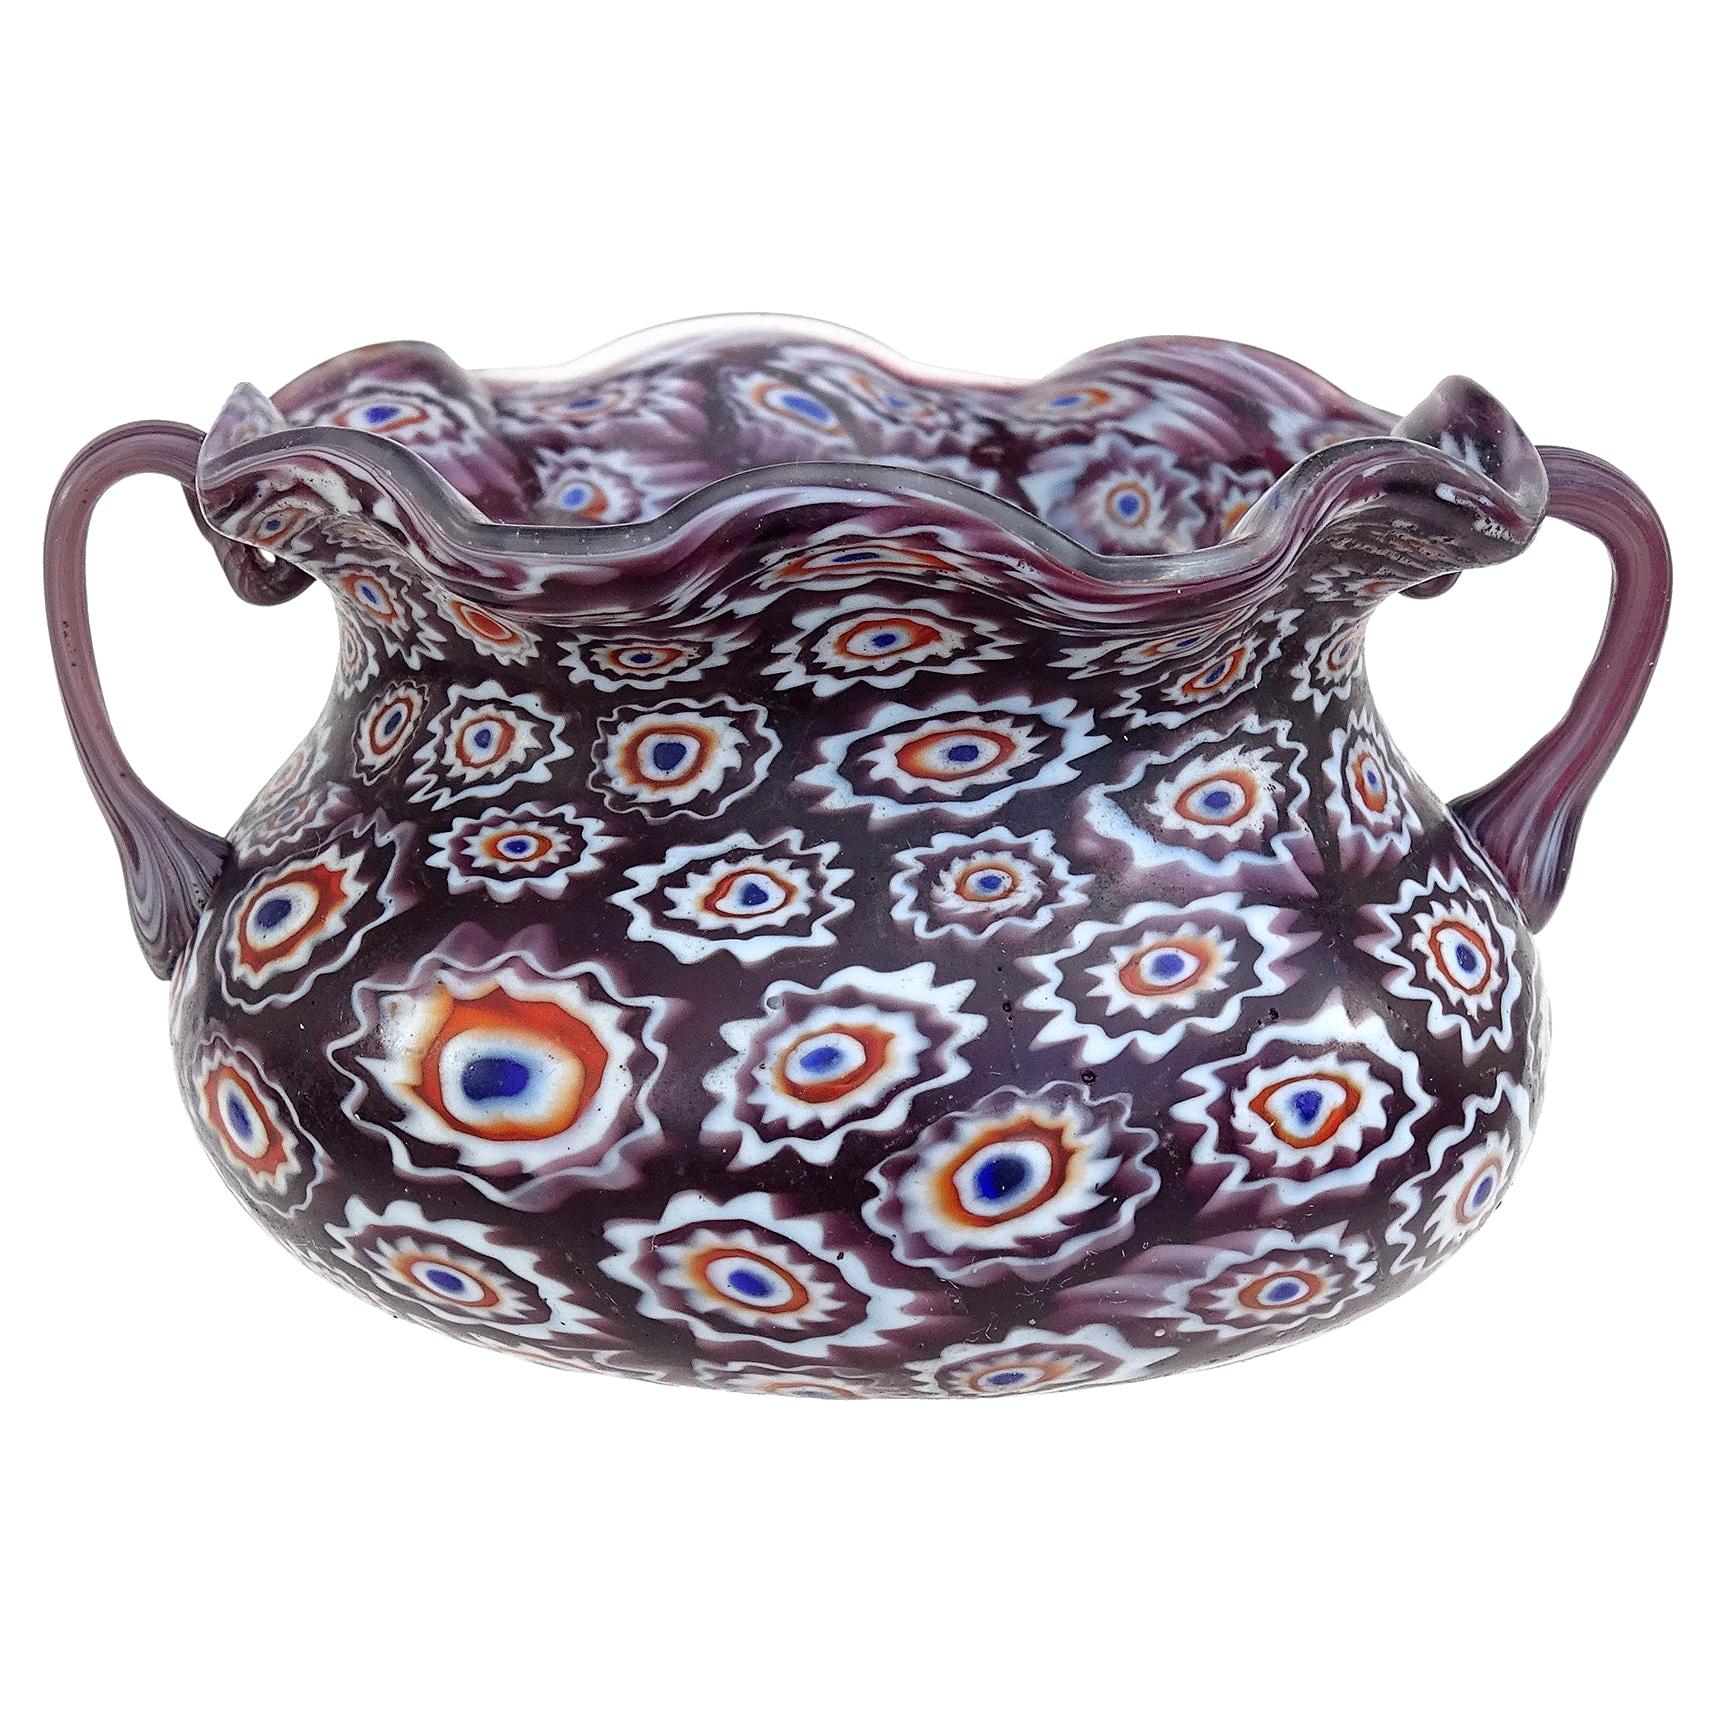 Fratelli Toso Murano Millefiori Flowers Antique Italian Art Glass Ruffled Bowl